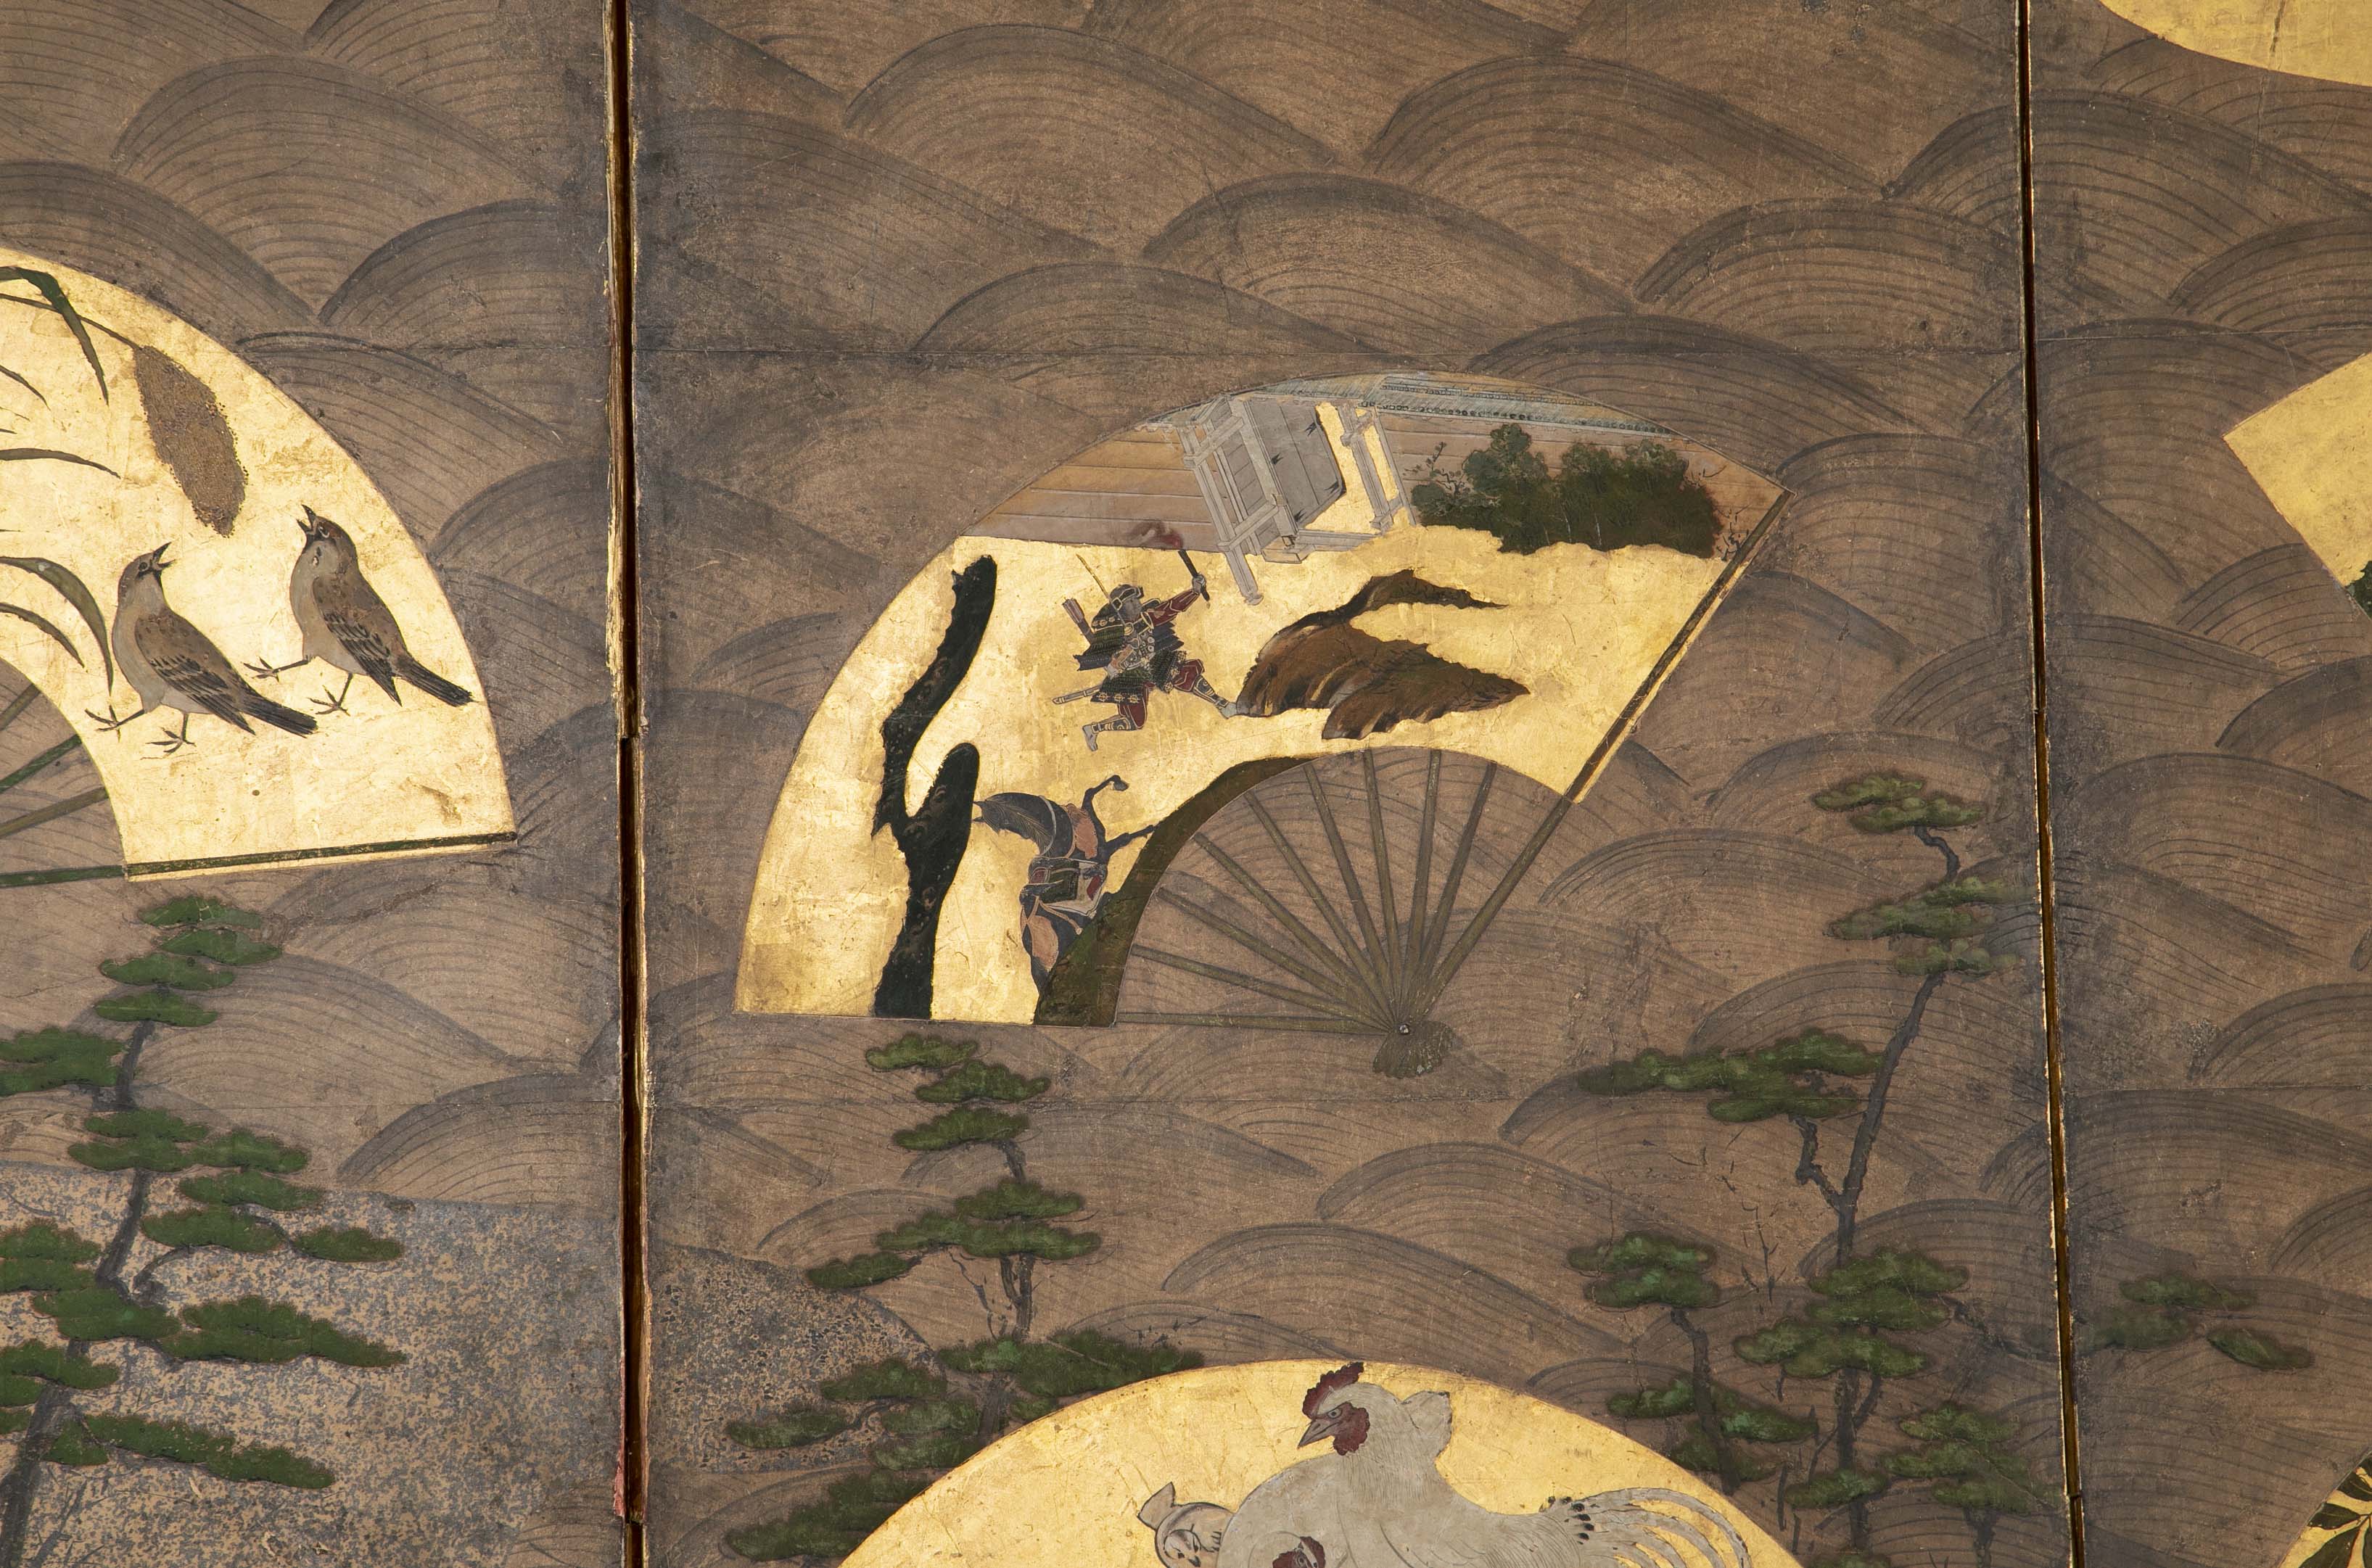 6 Panel Antique Japanese Screen Depicting Fans